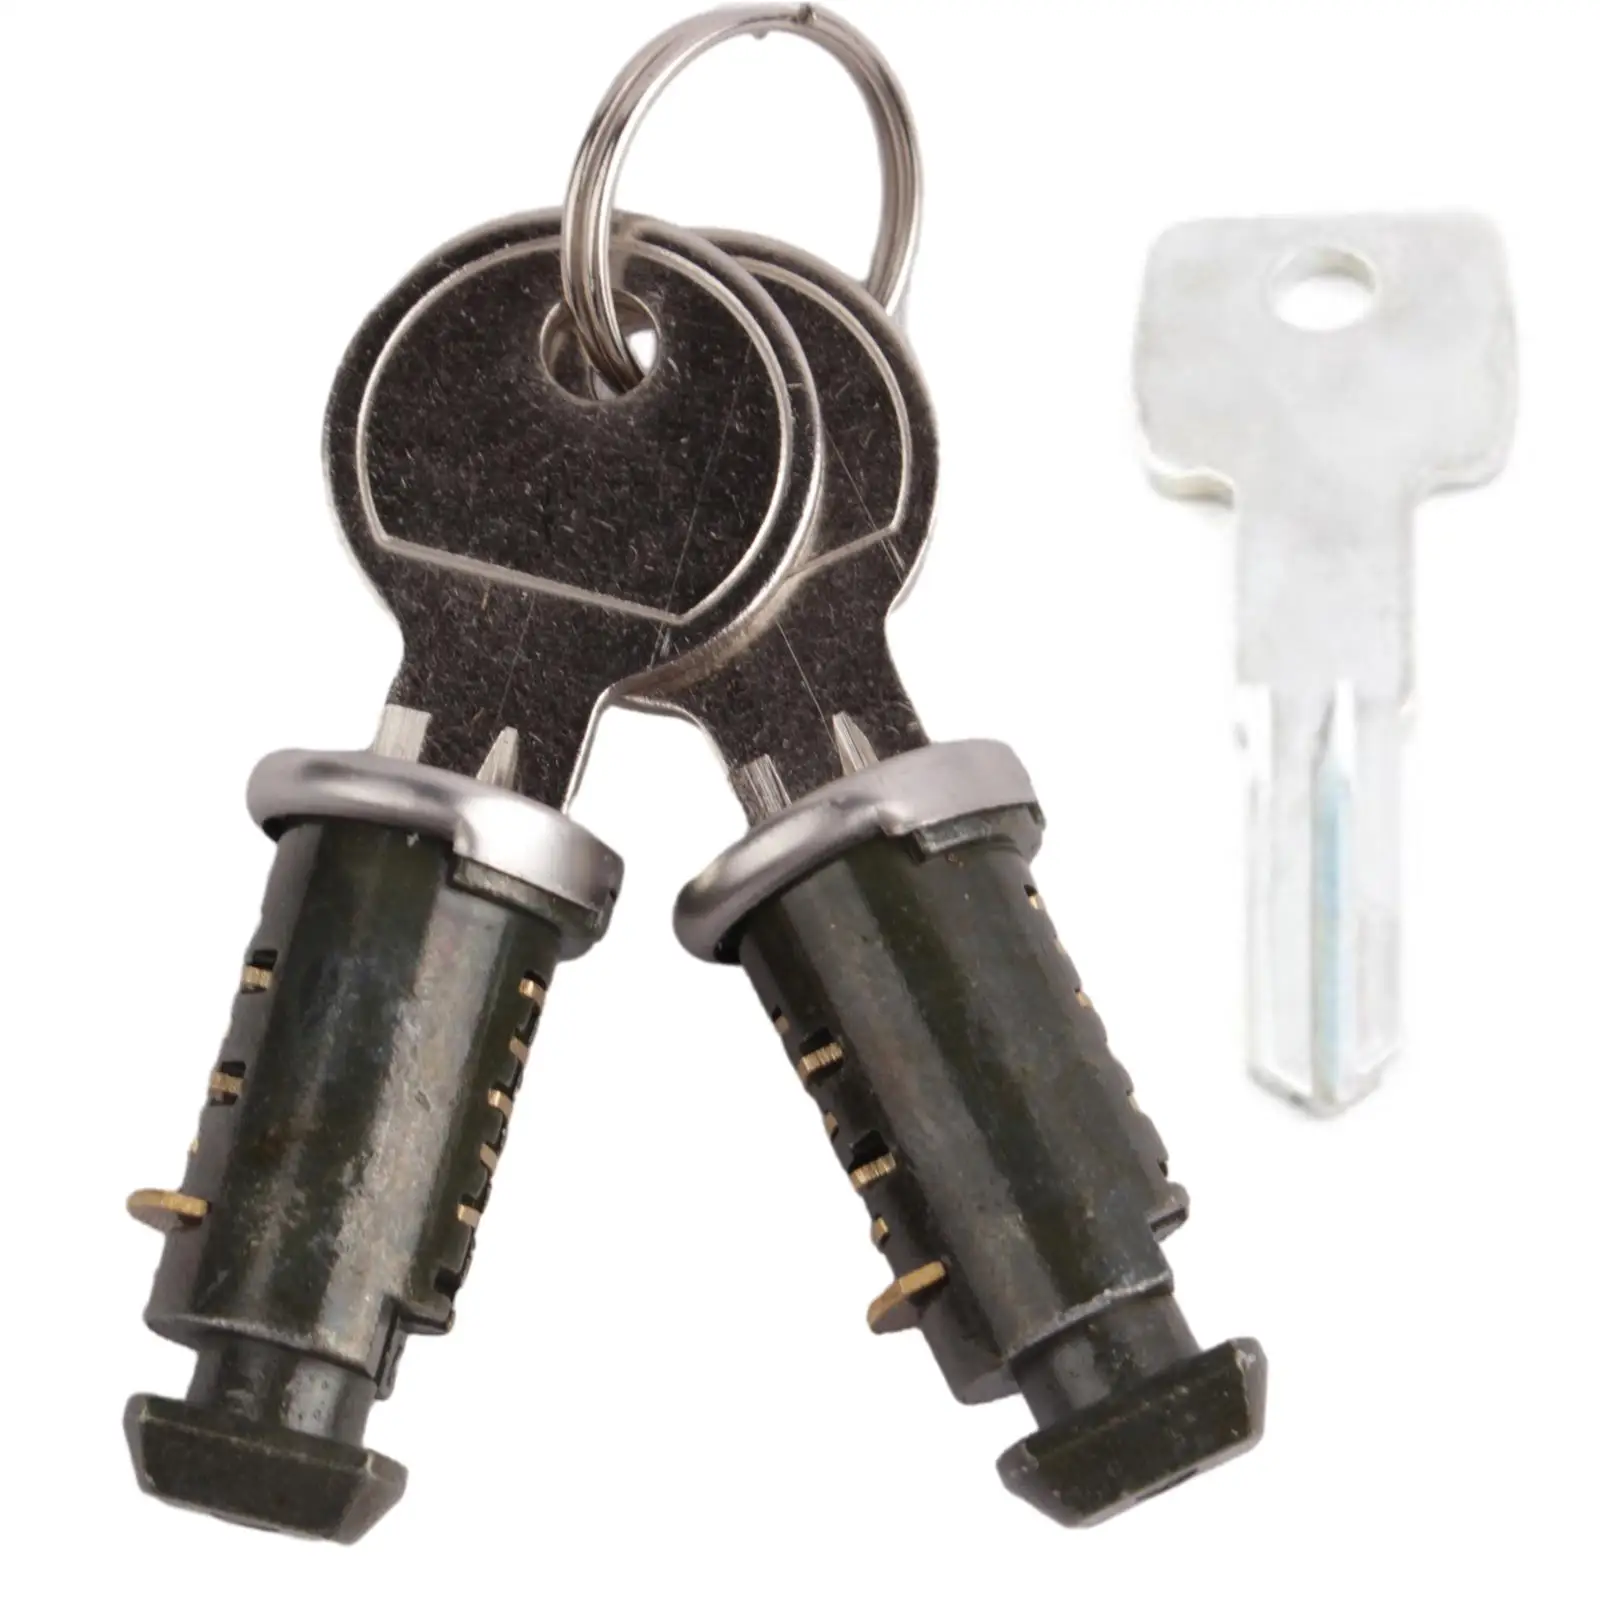 Lock Cylindes Roof Rack Cross Bars Locks Key Kit for SUV Car Rack Locks